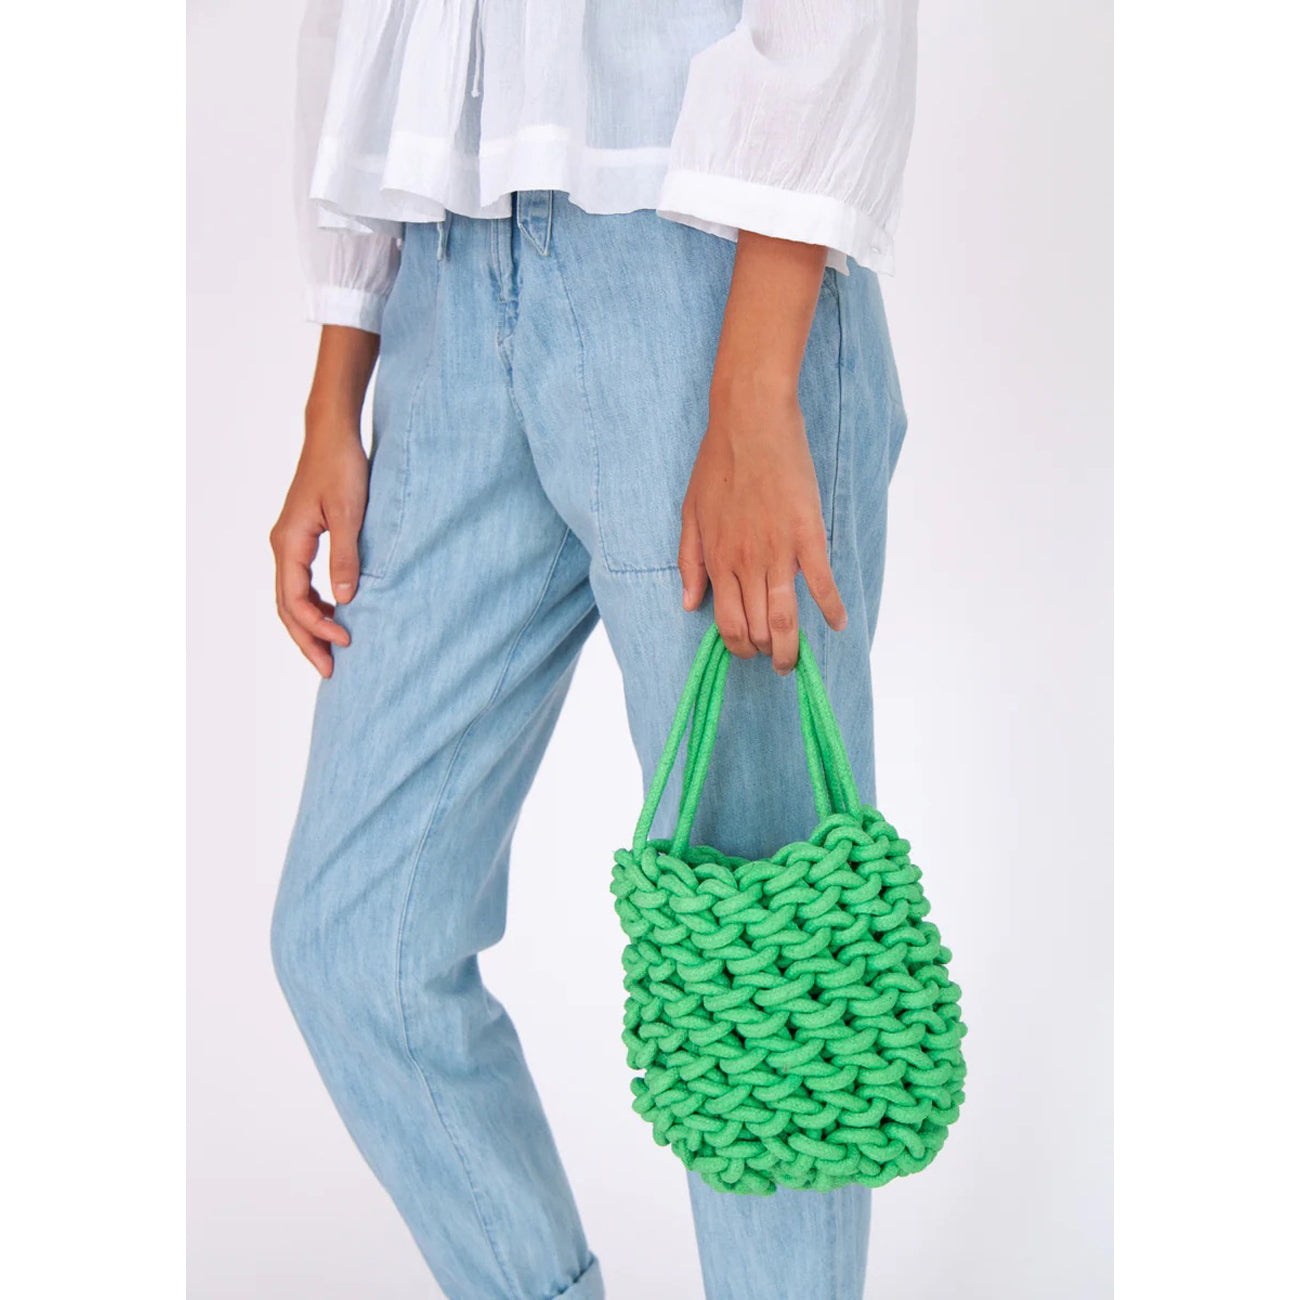 amarantha handbag in mint